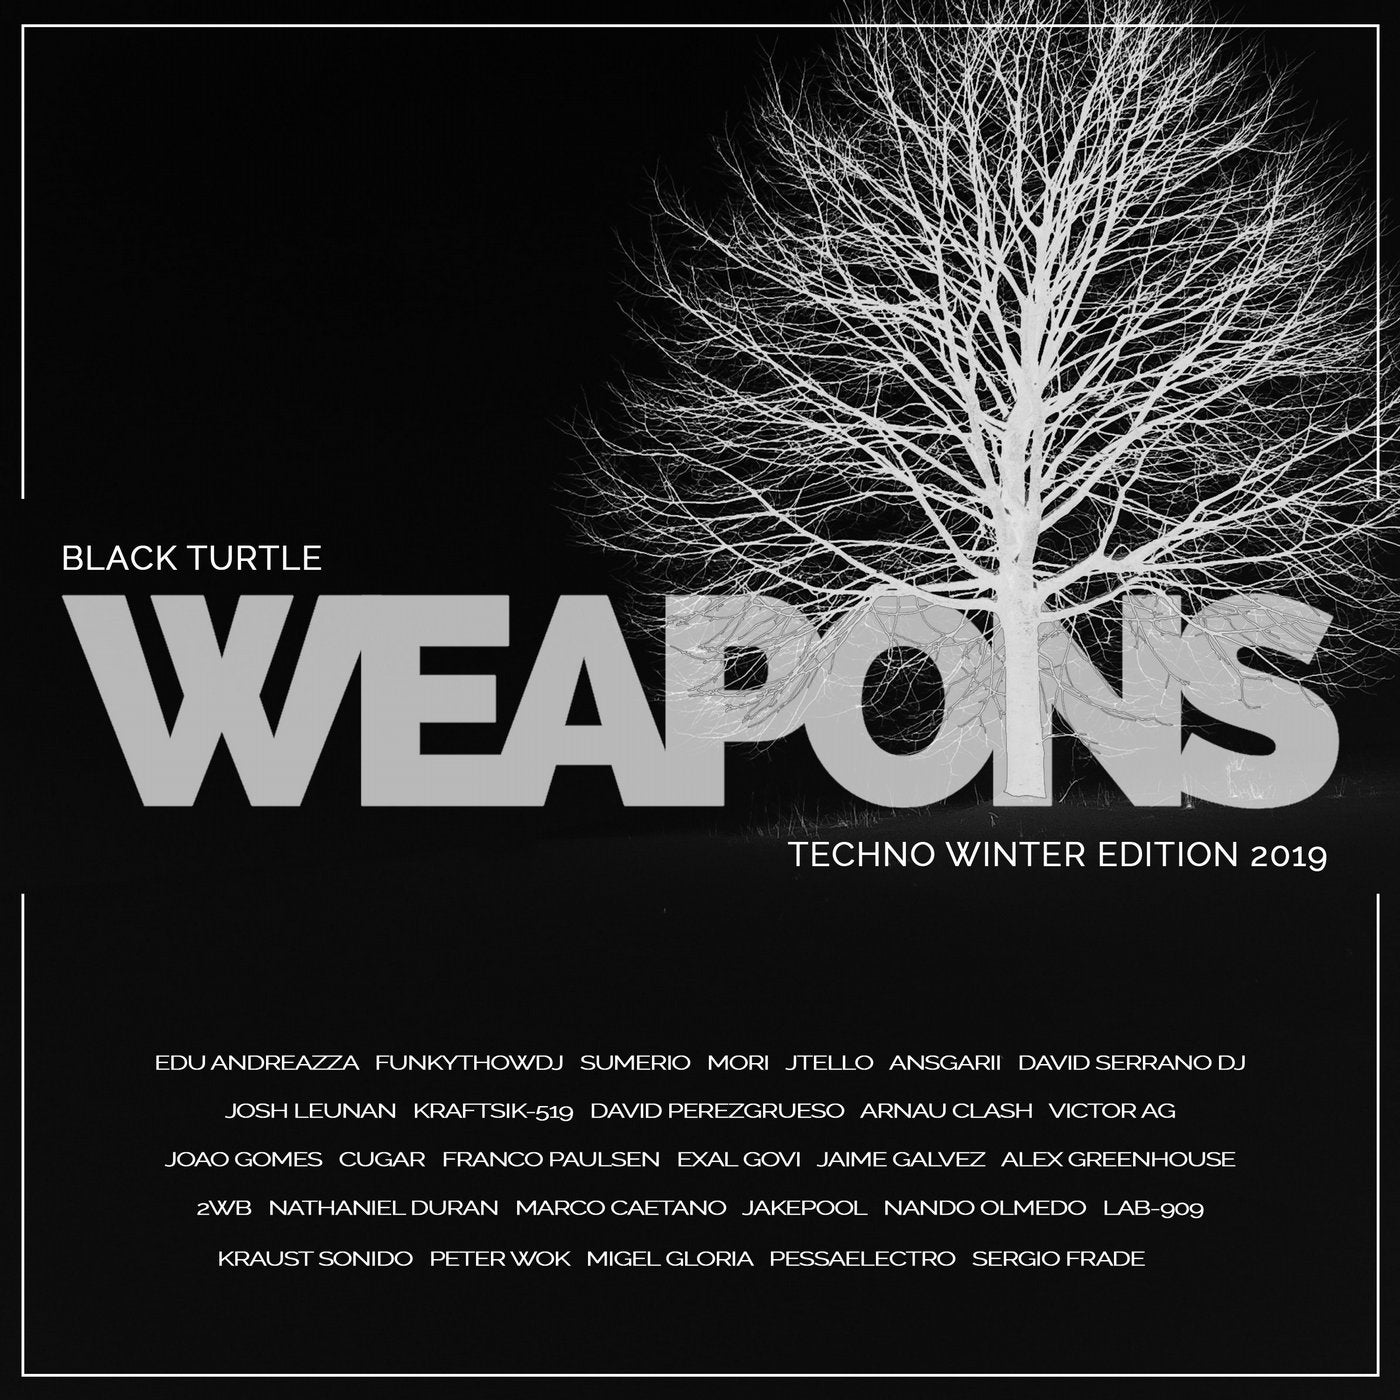 Black Turtle Weapons Techno Winter Edition 2019